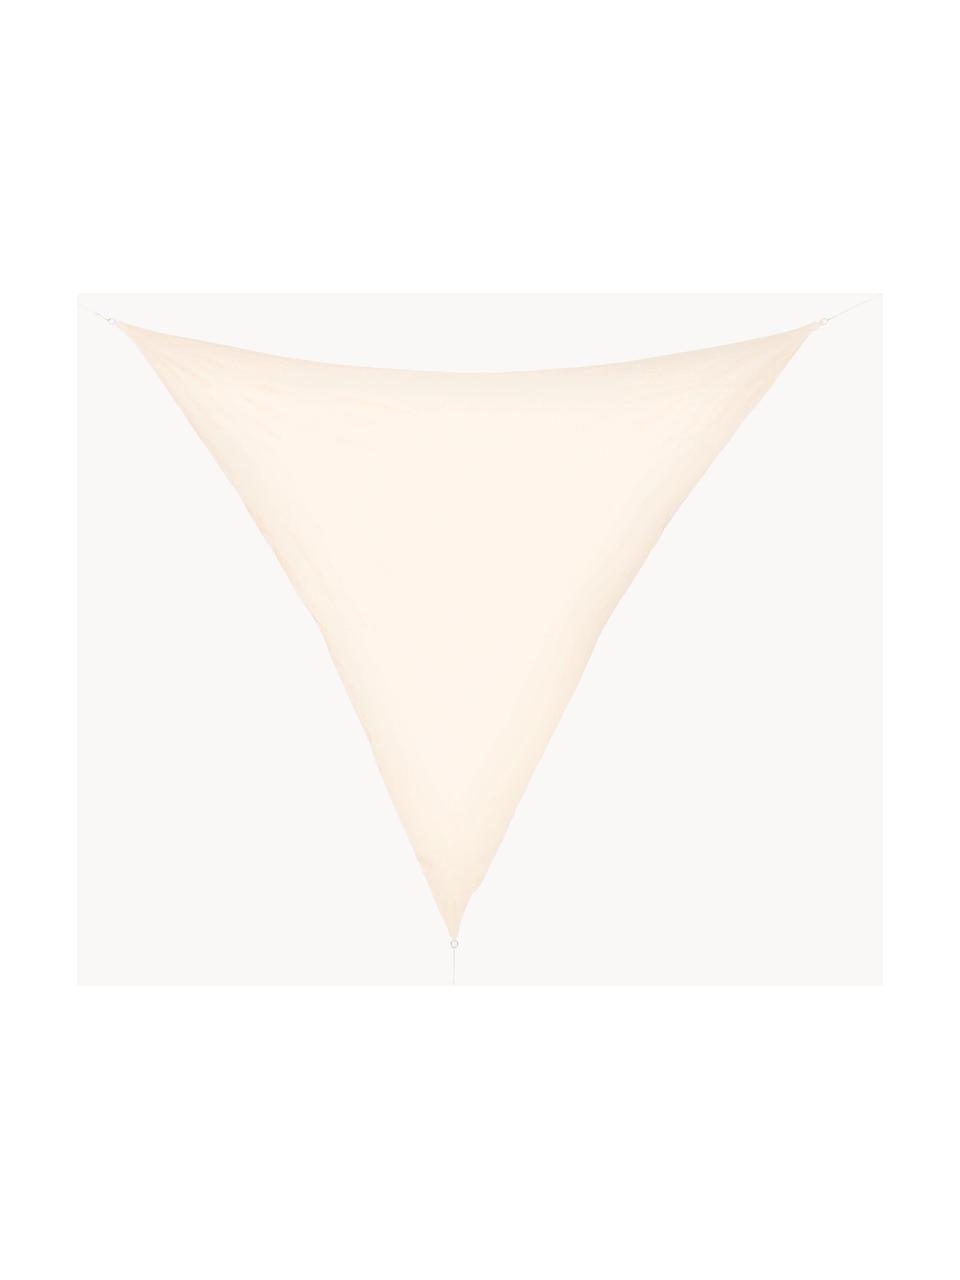 Tenda a vela Triangle, Bianco crema, Larg. 360 x Lung. 360 cm